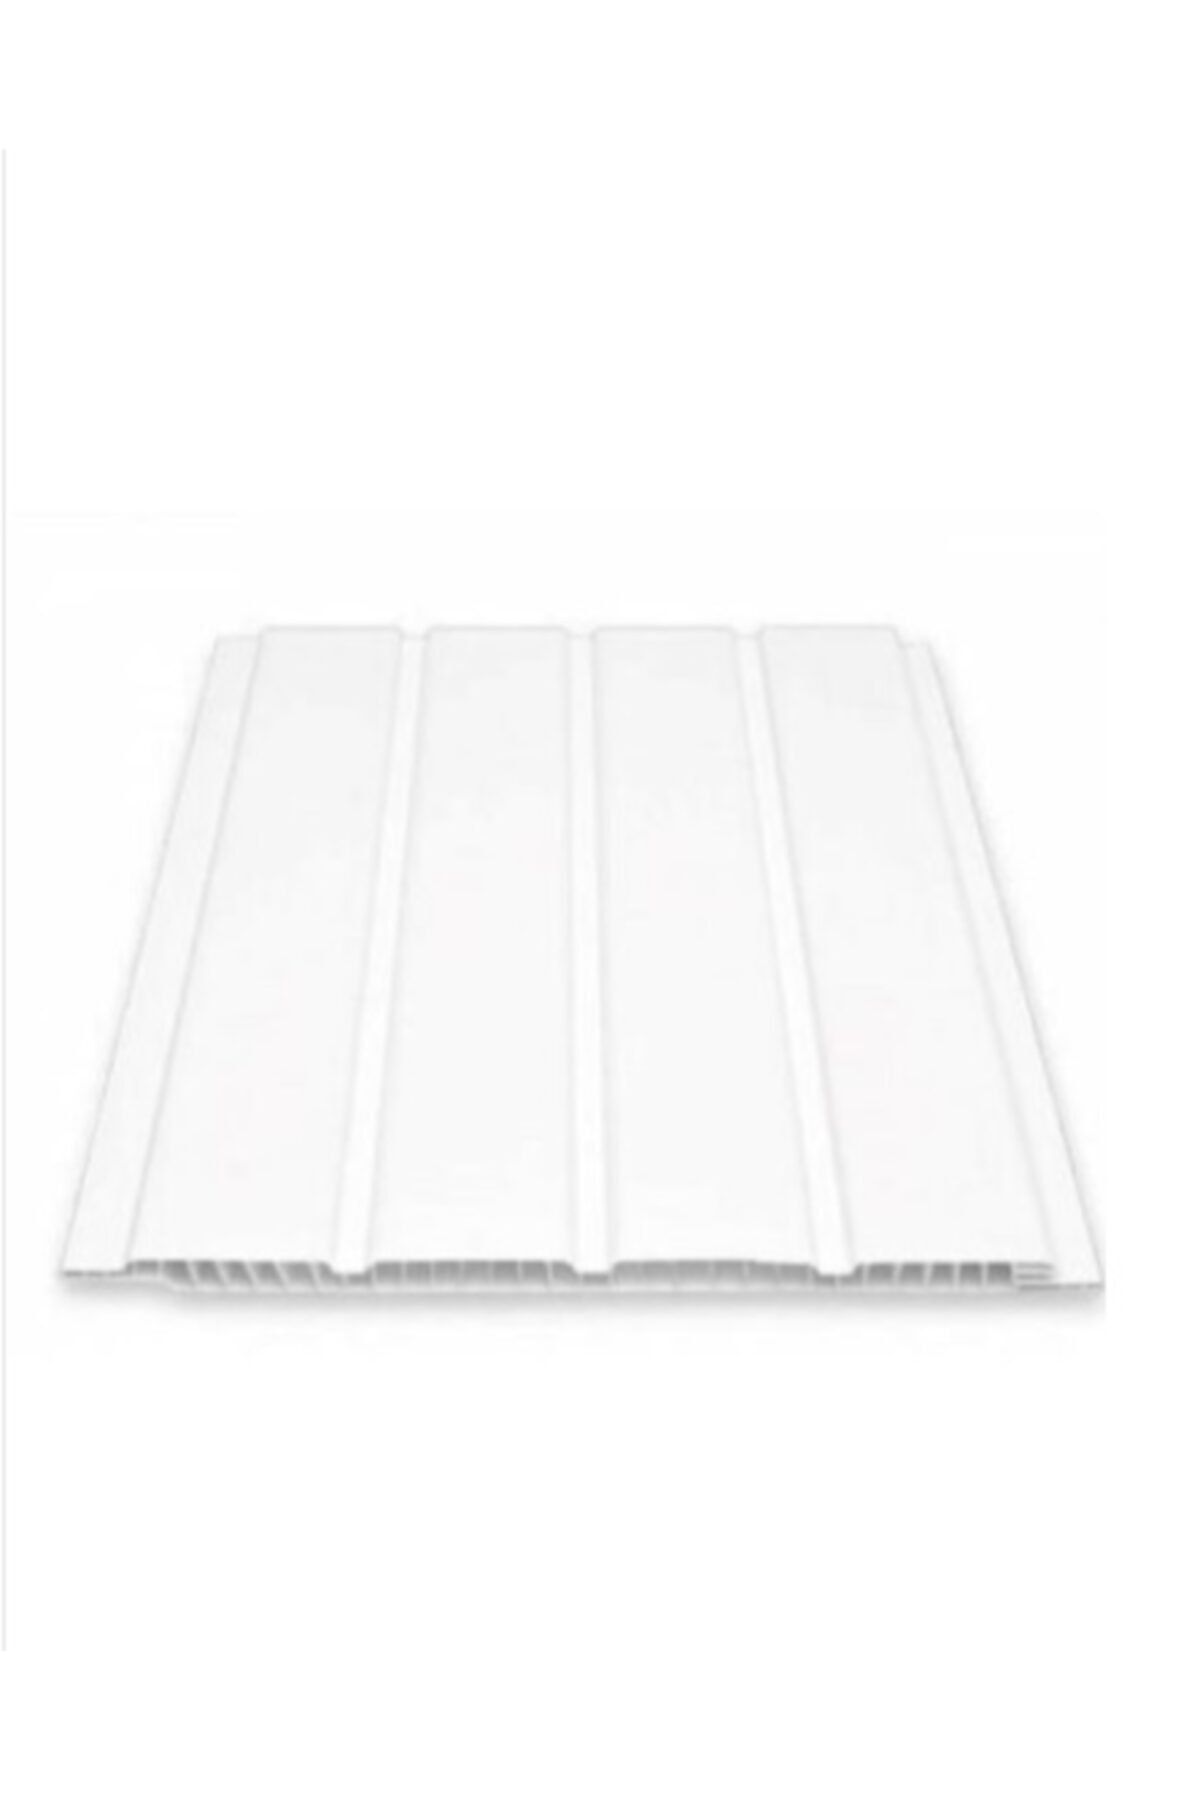 Lambiri Fugalı Beyaz Plastik Pvc Duvar - Tavan / 10 Adet 20 cm X 1 metre - 2 metrekare